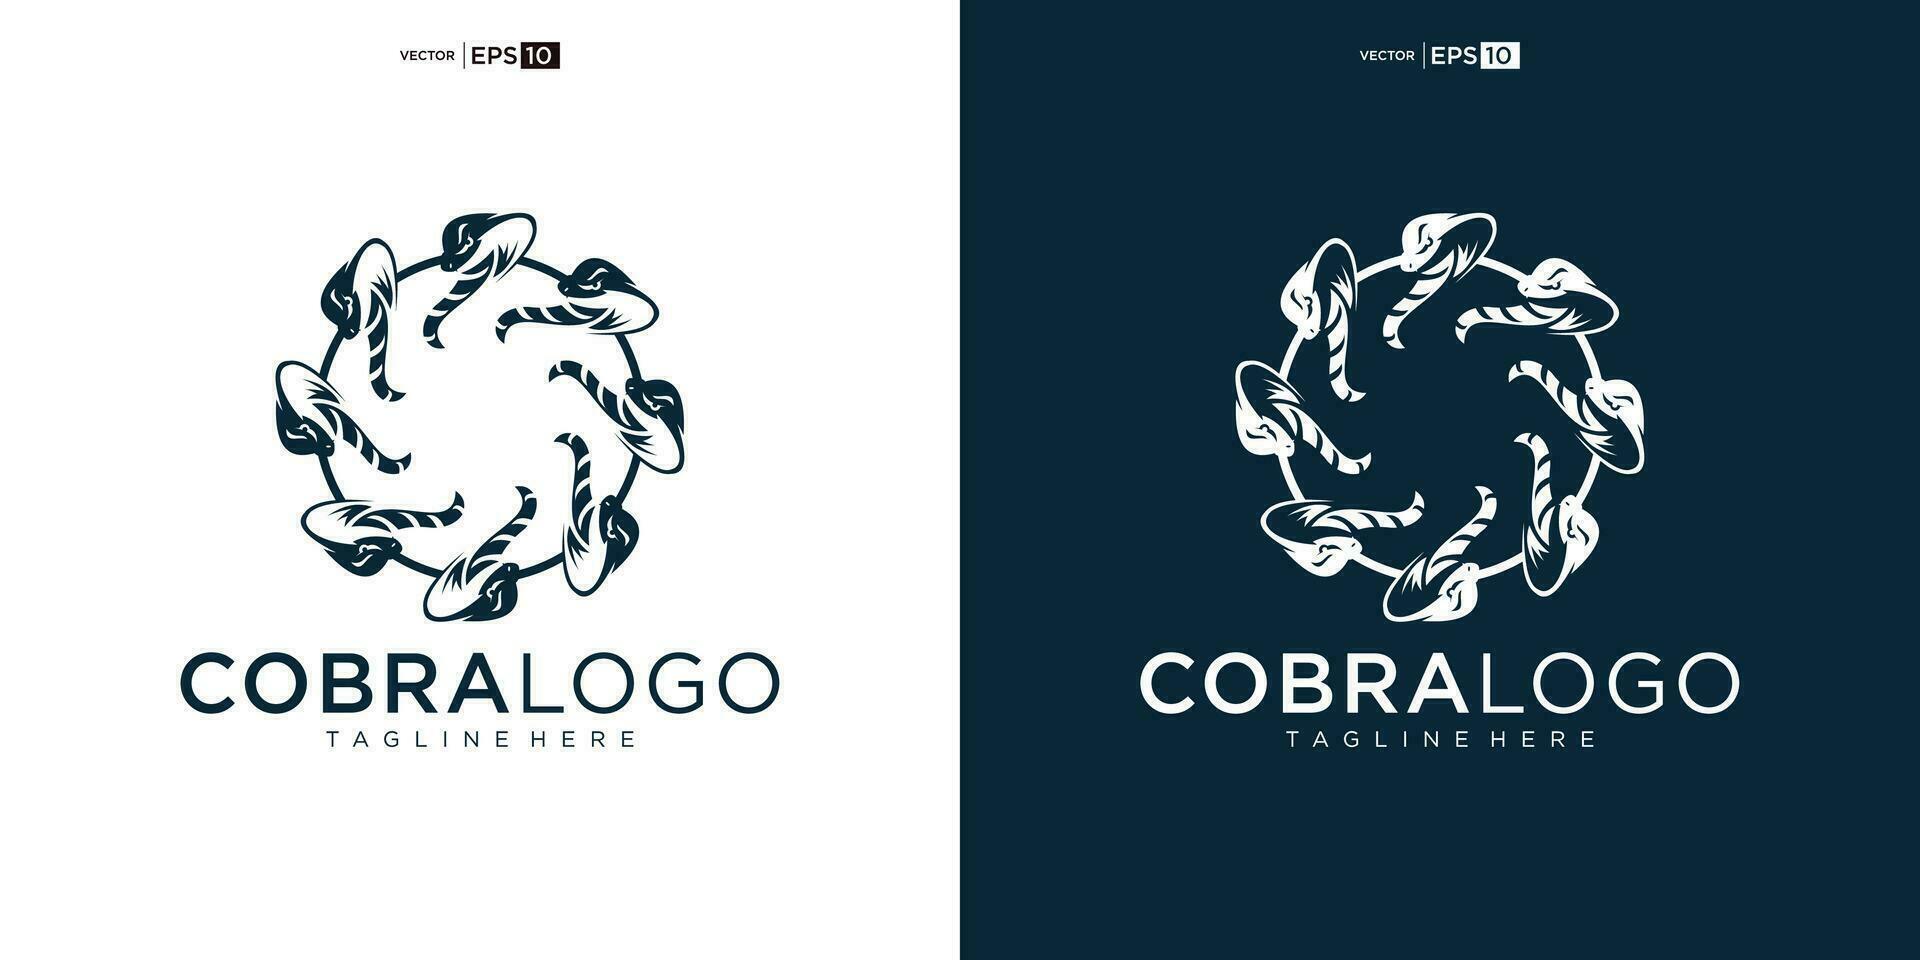 cobra head vector illustration for icon, symbol or logo. snake head logo